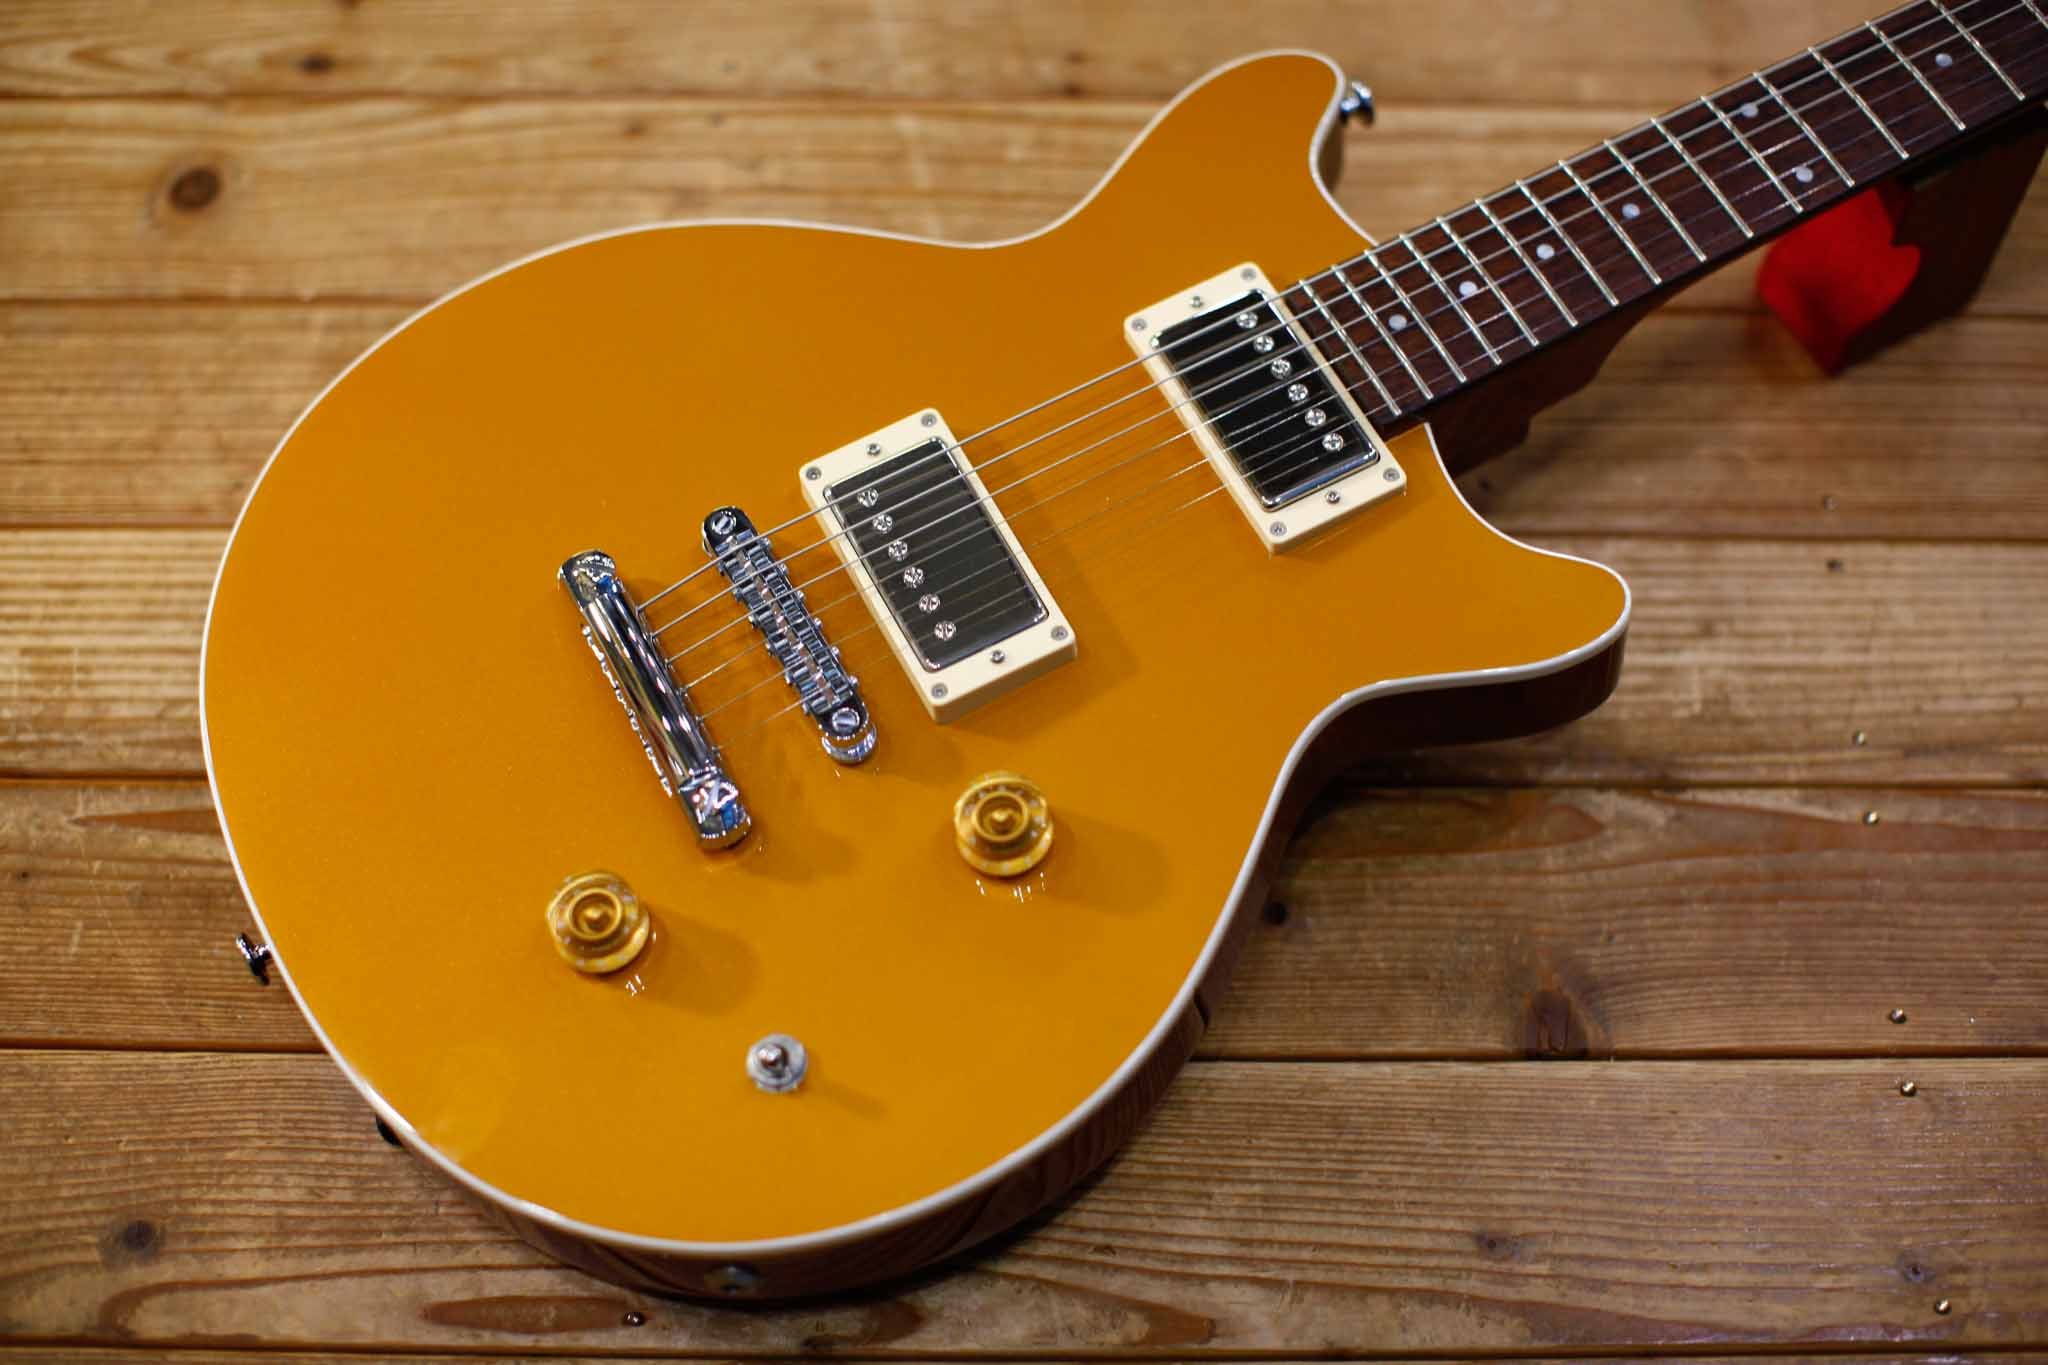 Kz Guitar Works Kz One Semi-Hollow 【2H6】 T.O.M Gold Top “Custom Line”